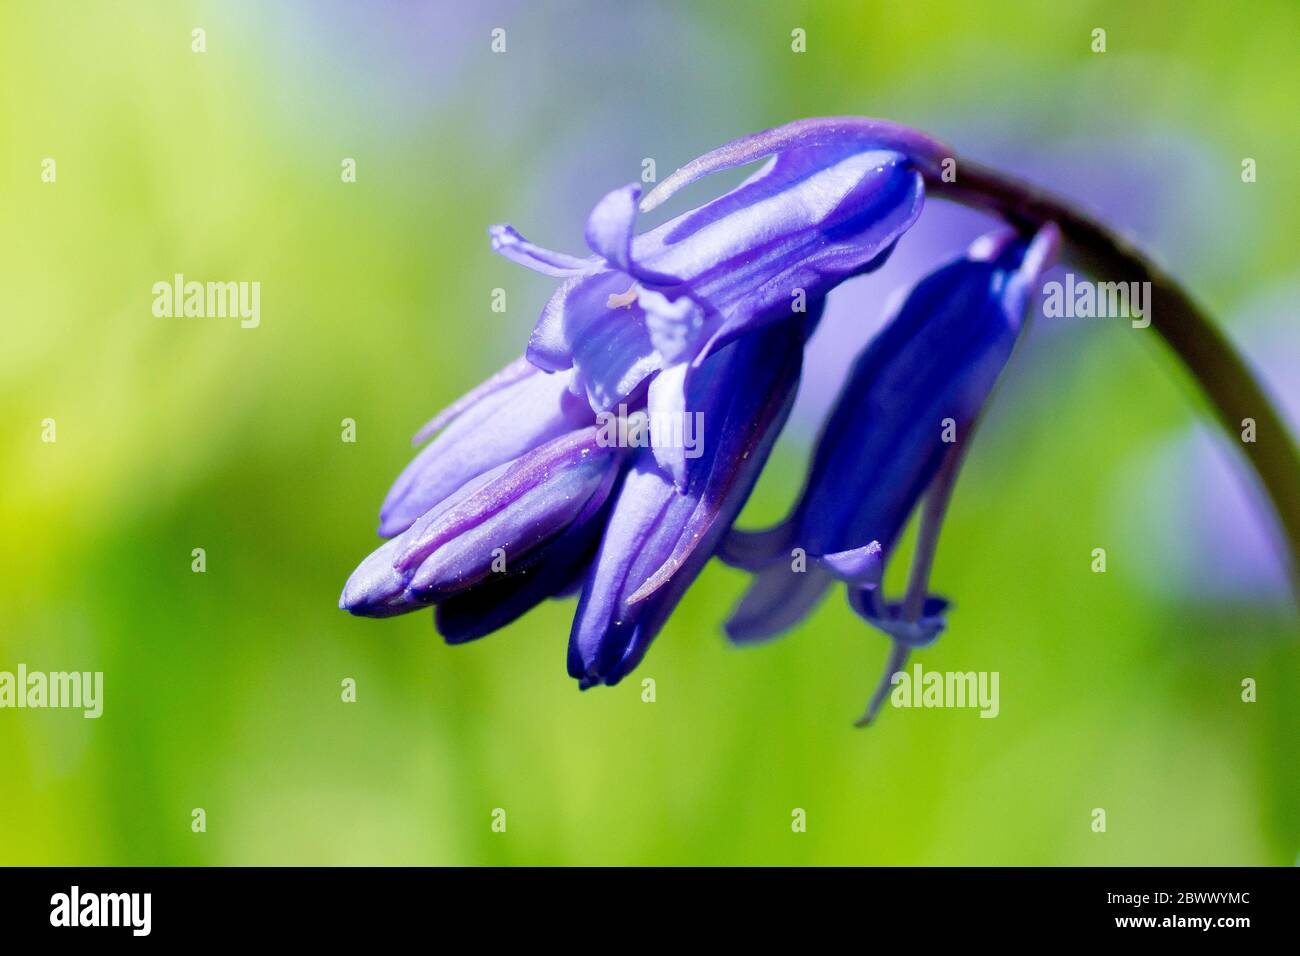 Bluebell o jacinto silvestre (endymion non-scriptus o hyacintoides non-scripta), cerca de una sola planta de floración con poca profundidad de campo. Foto de stock